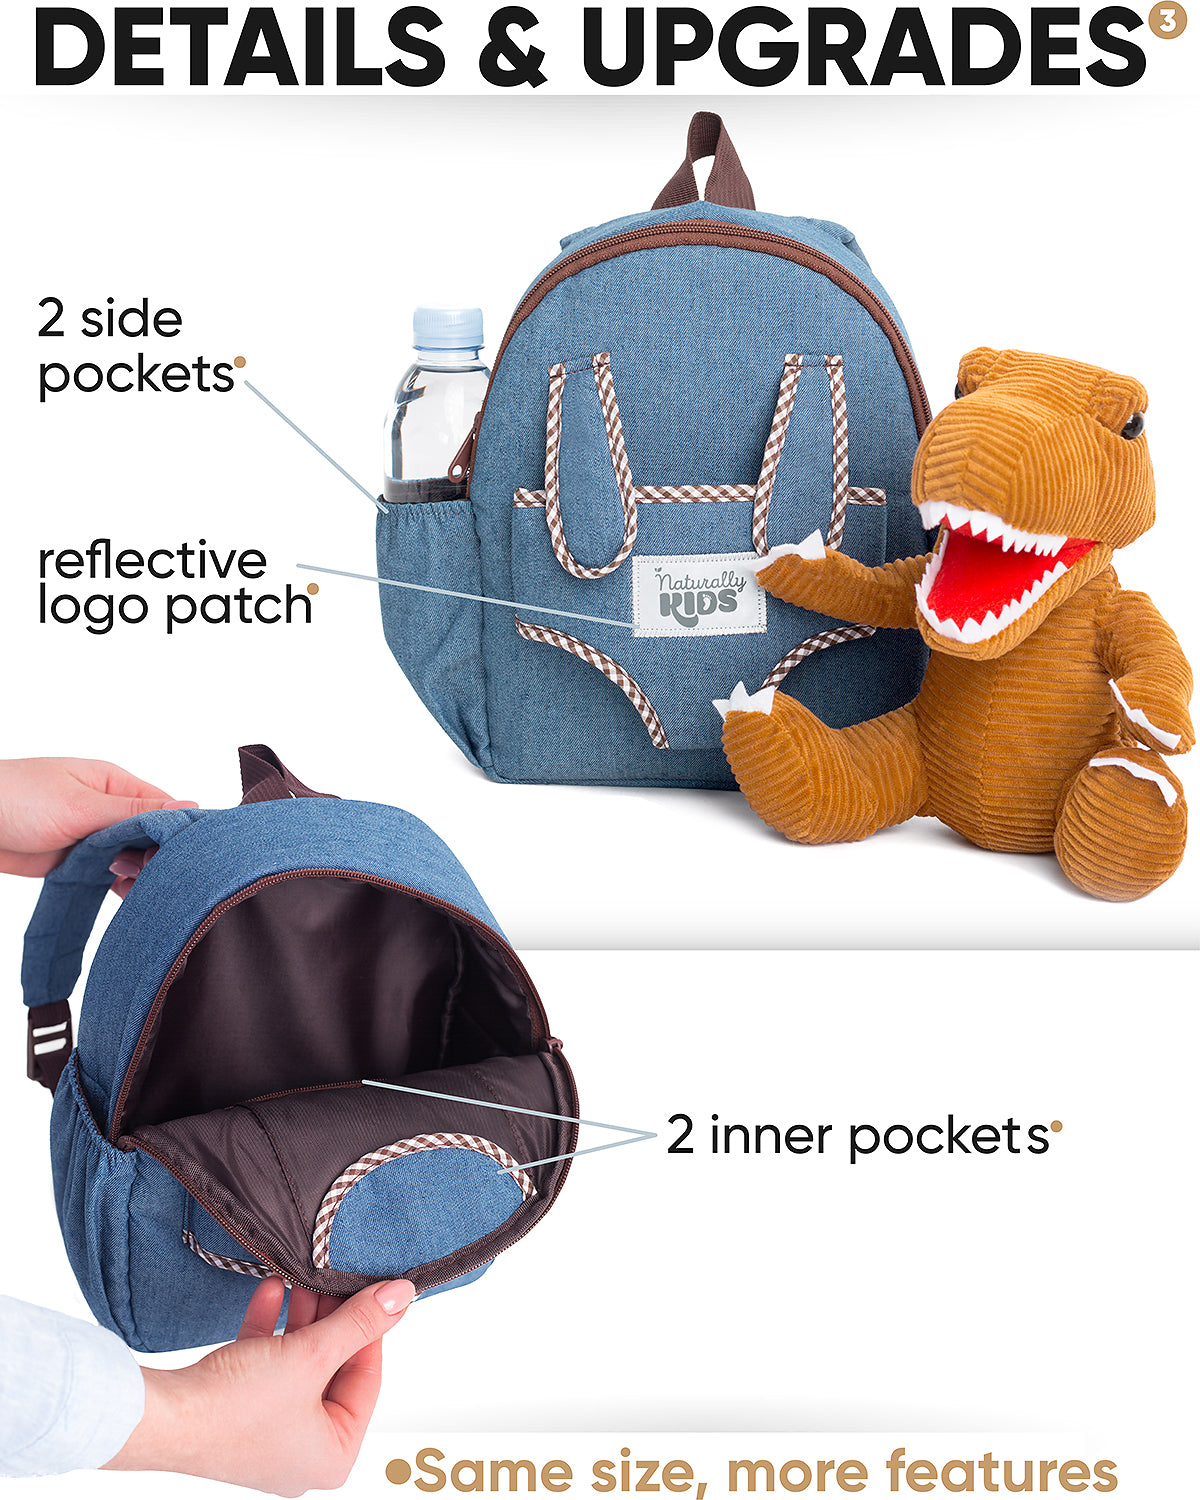 Naturally KIDS Small Dinosaur Backpack - Dinosaur Toys for Kids 3